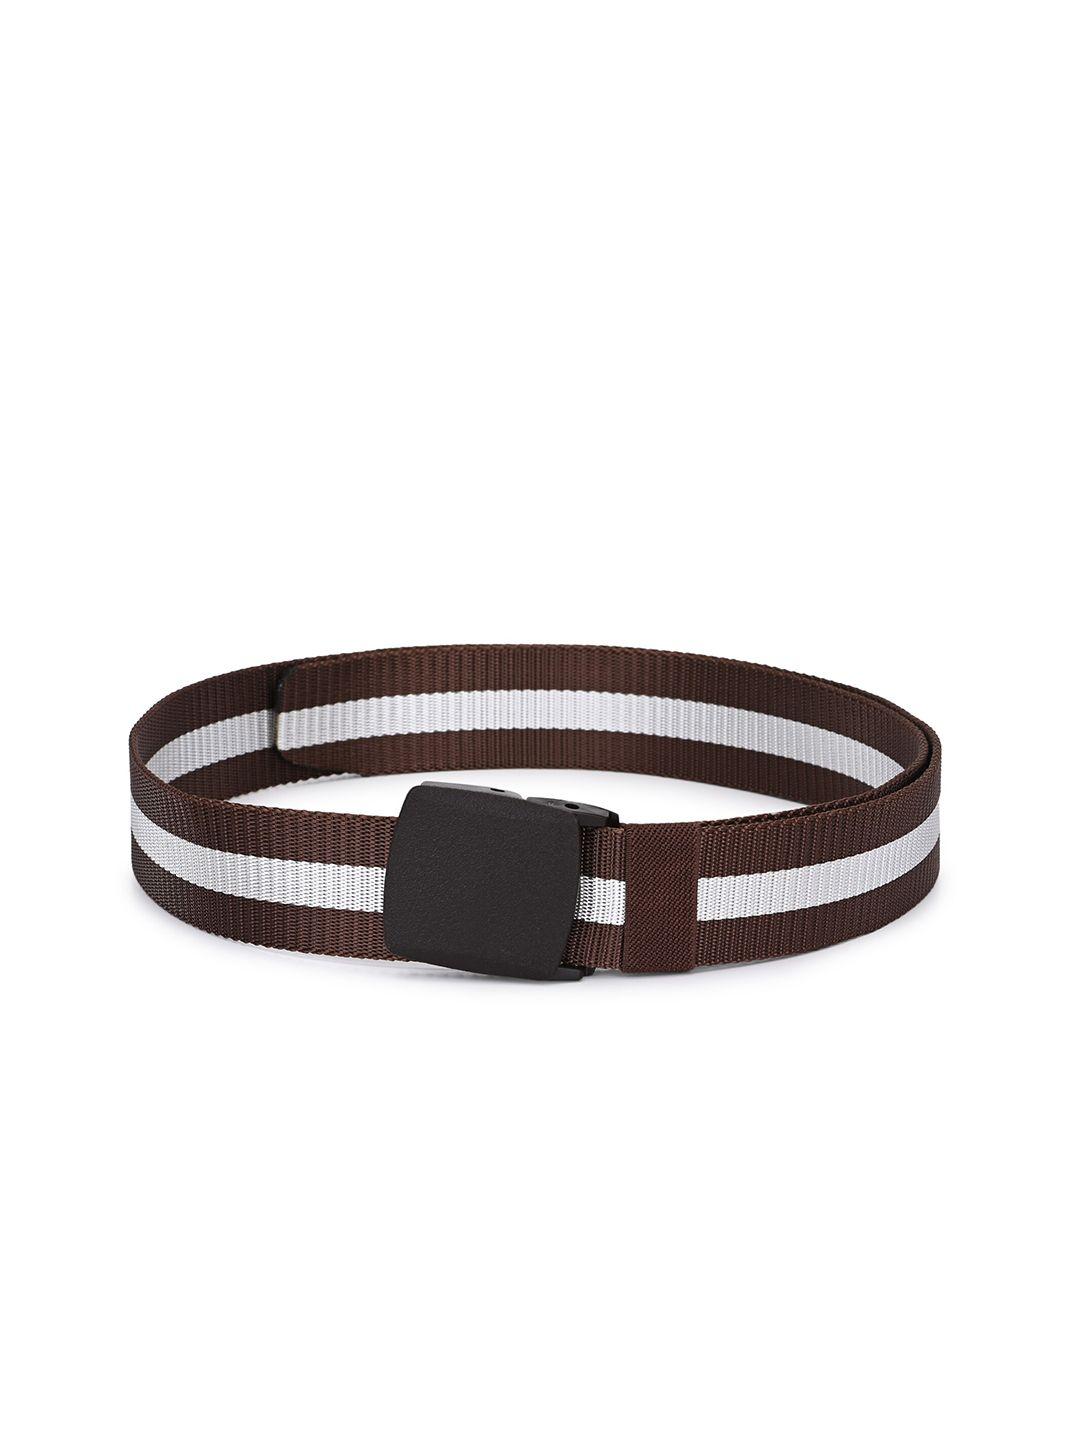 calvadoss girls brown & white striped canvas belt